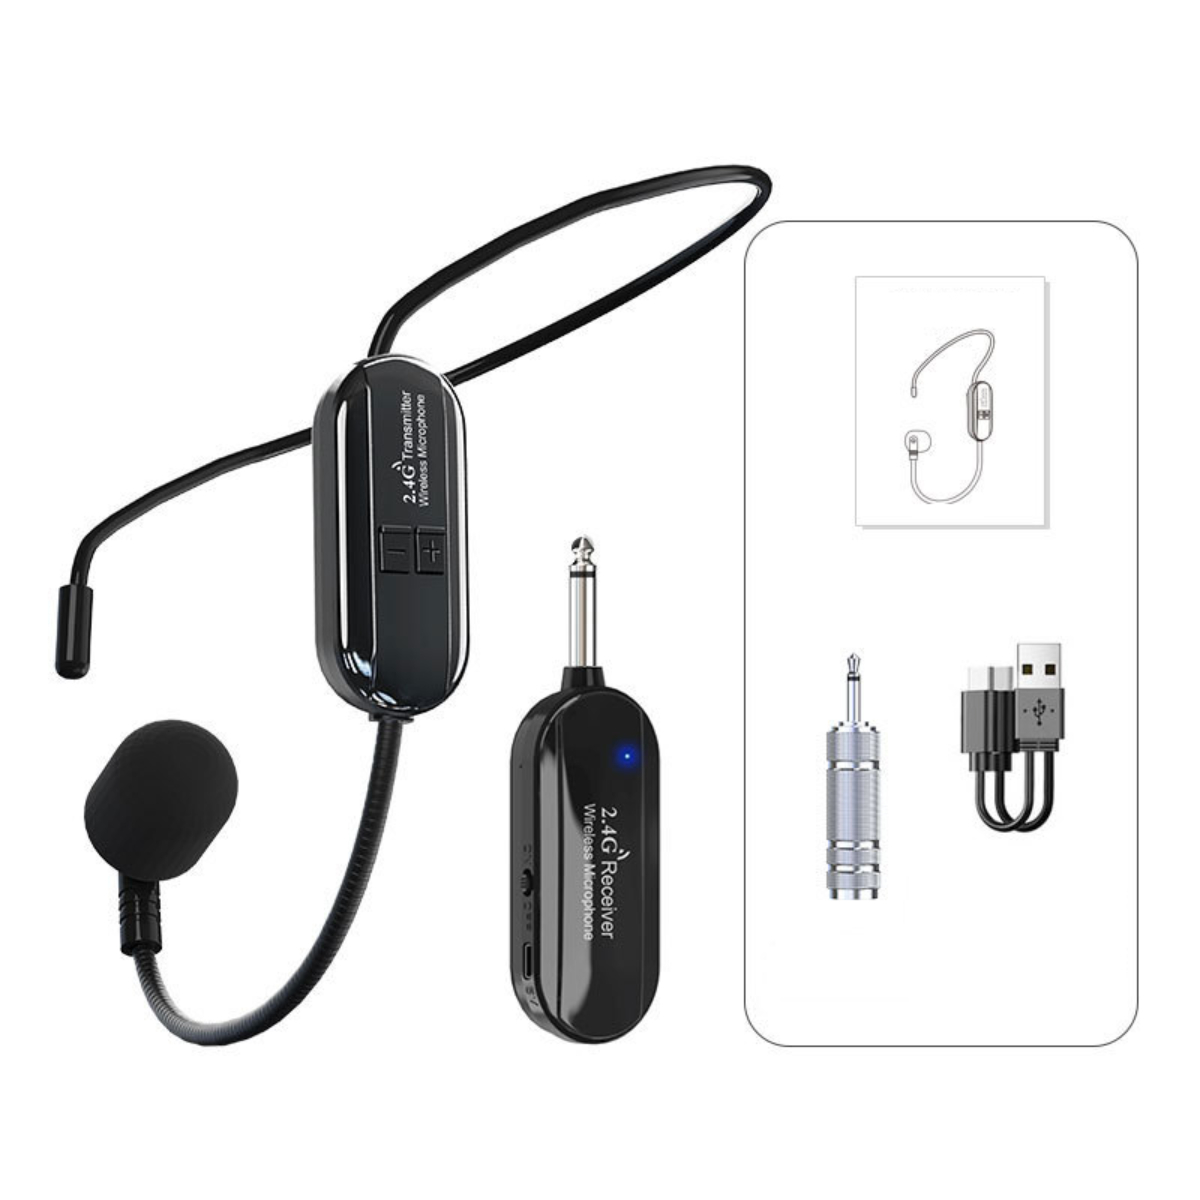 BYTELIKE Kondensator-Headset 2.4G drahtlose ein schwarz Headset-Mikrofon zwei Mikrofon Headset tow